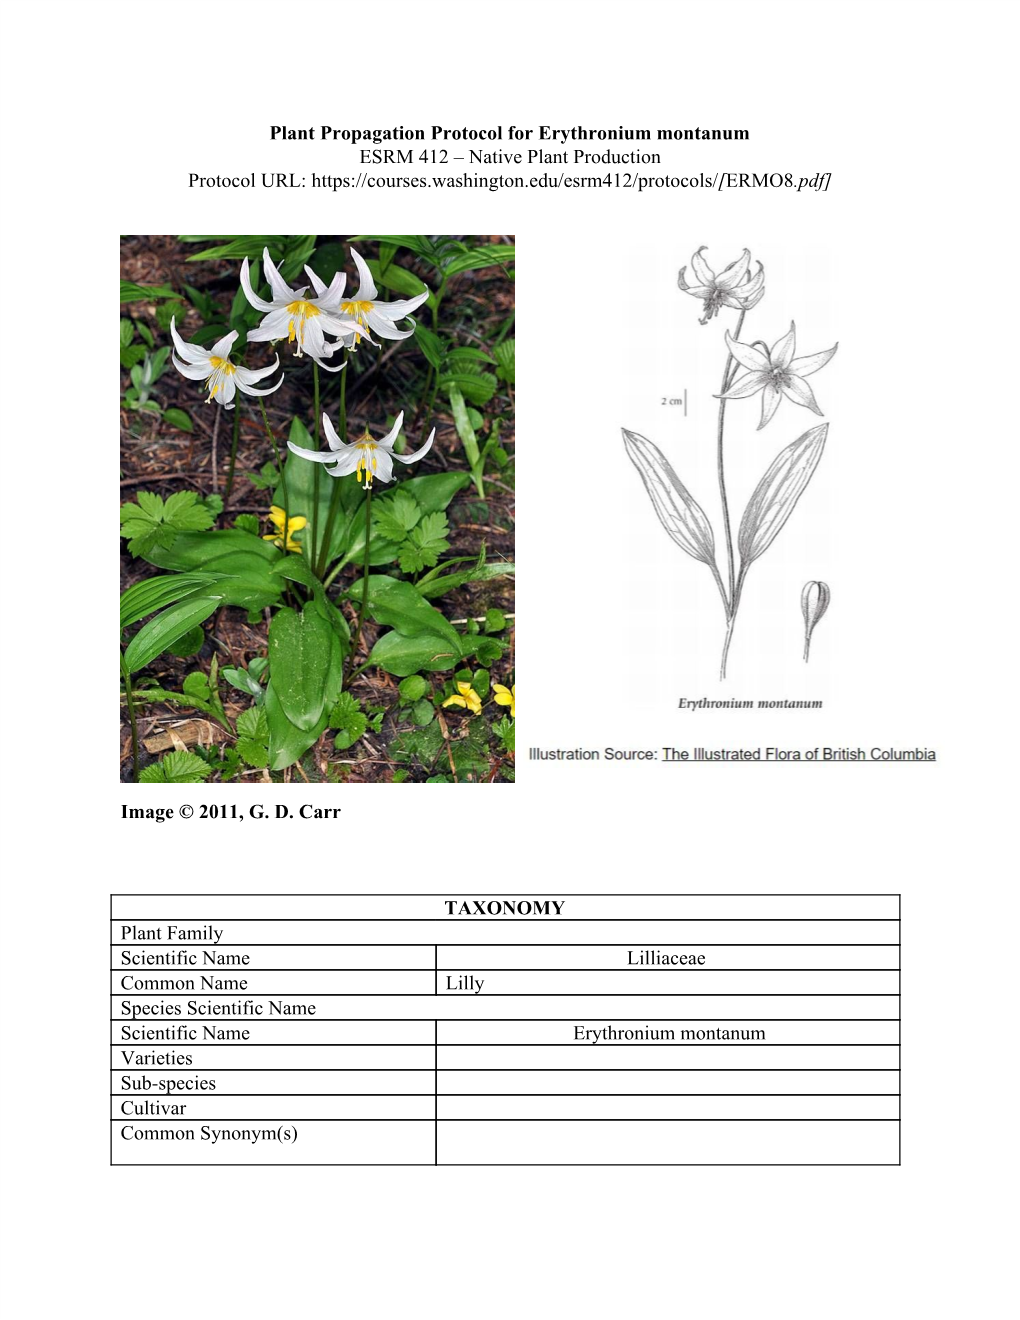 Plant Propagation Protocol for Erythronium Montanum ESRM 412 – Native Plant Production Protocol URL